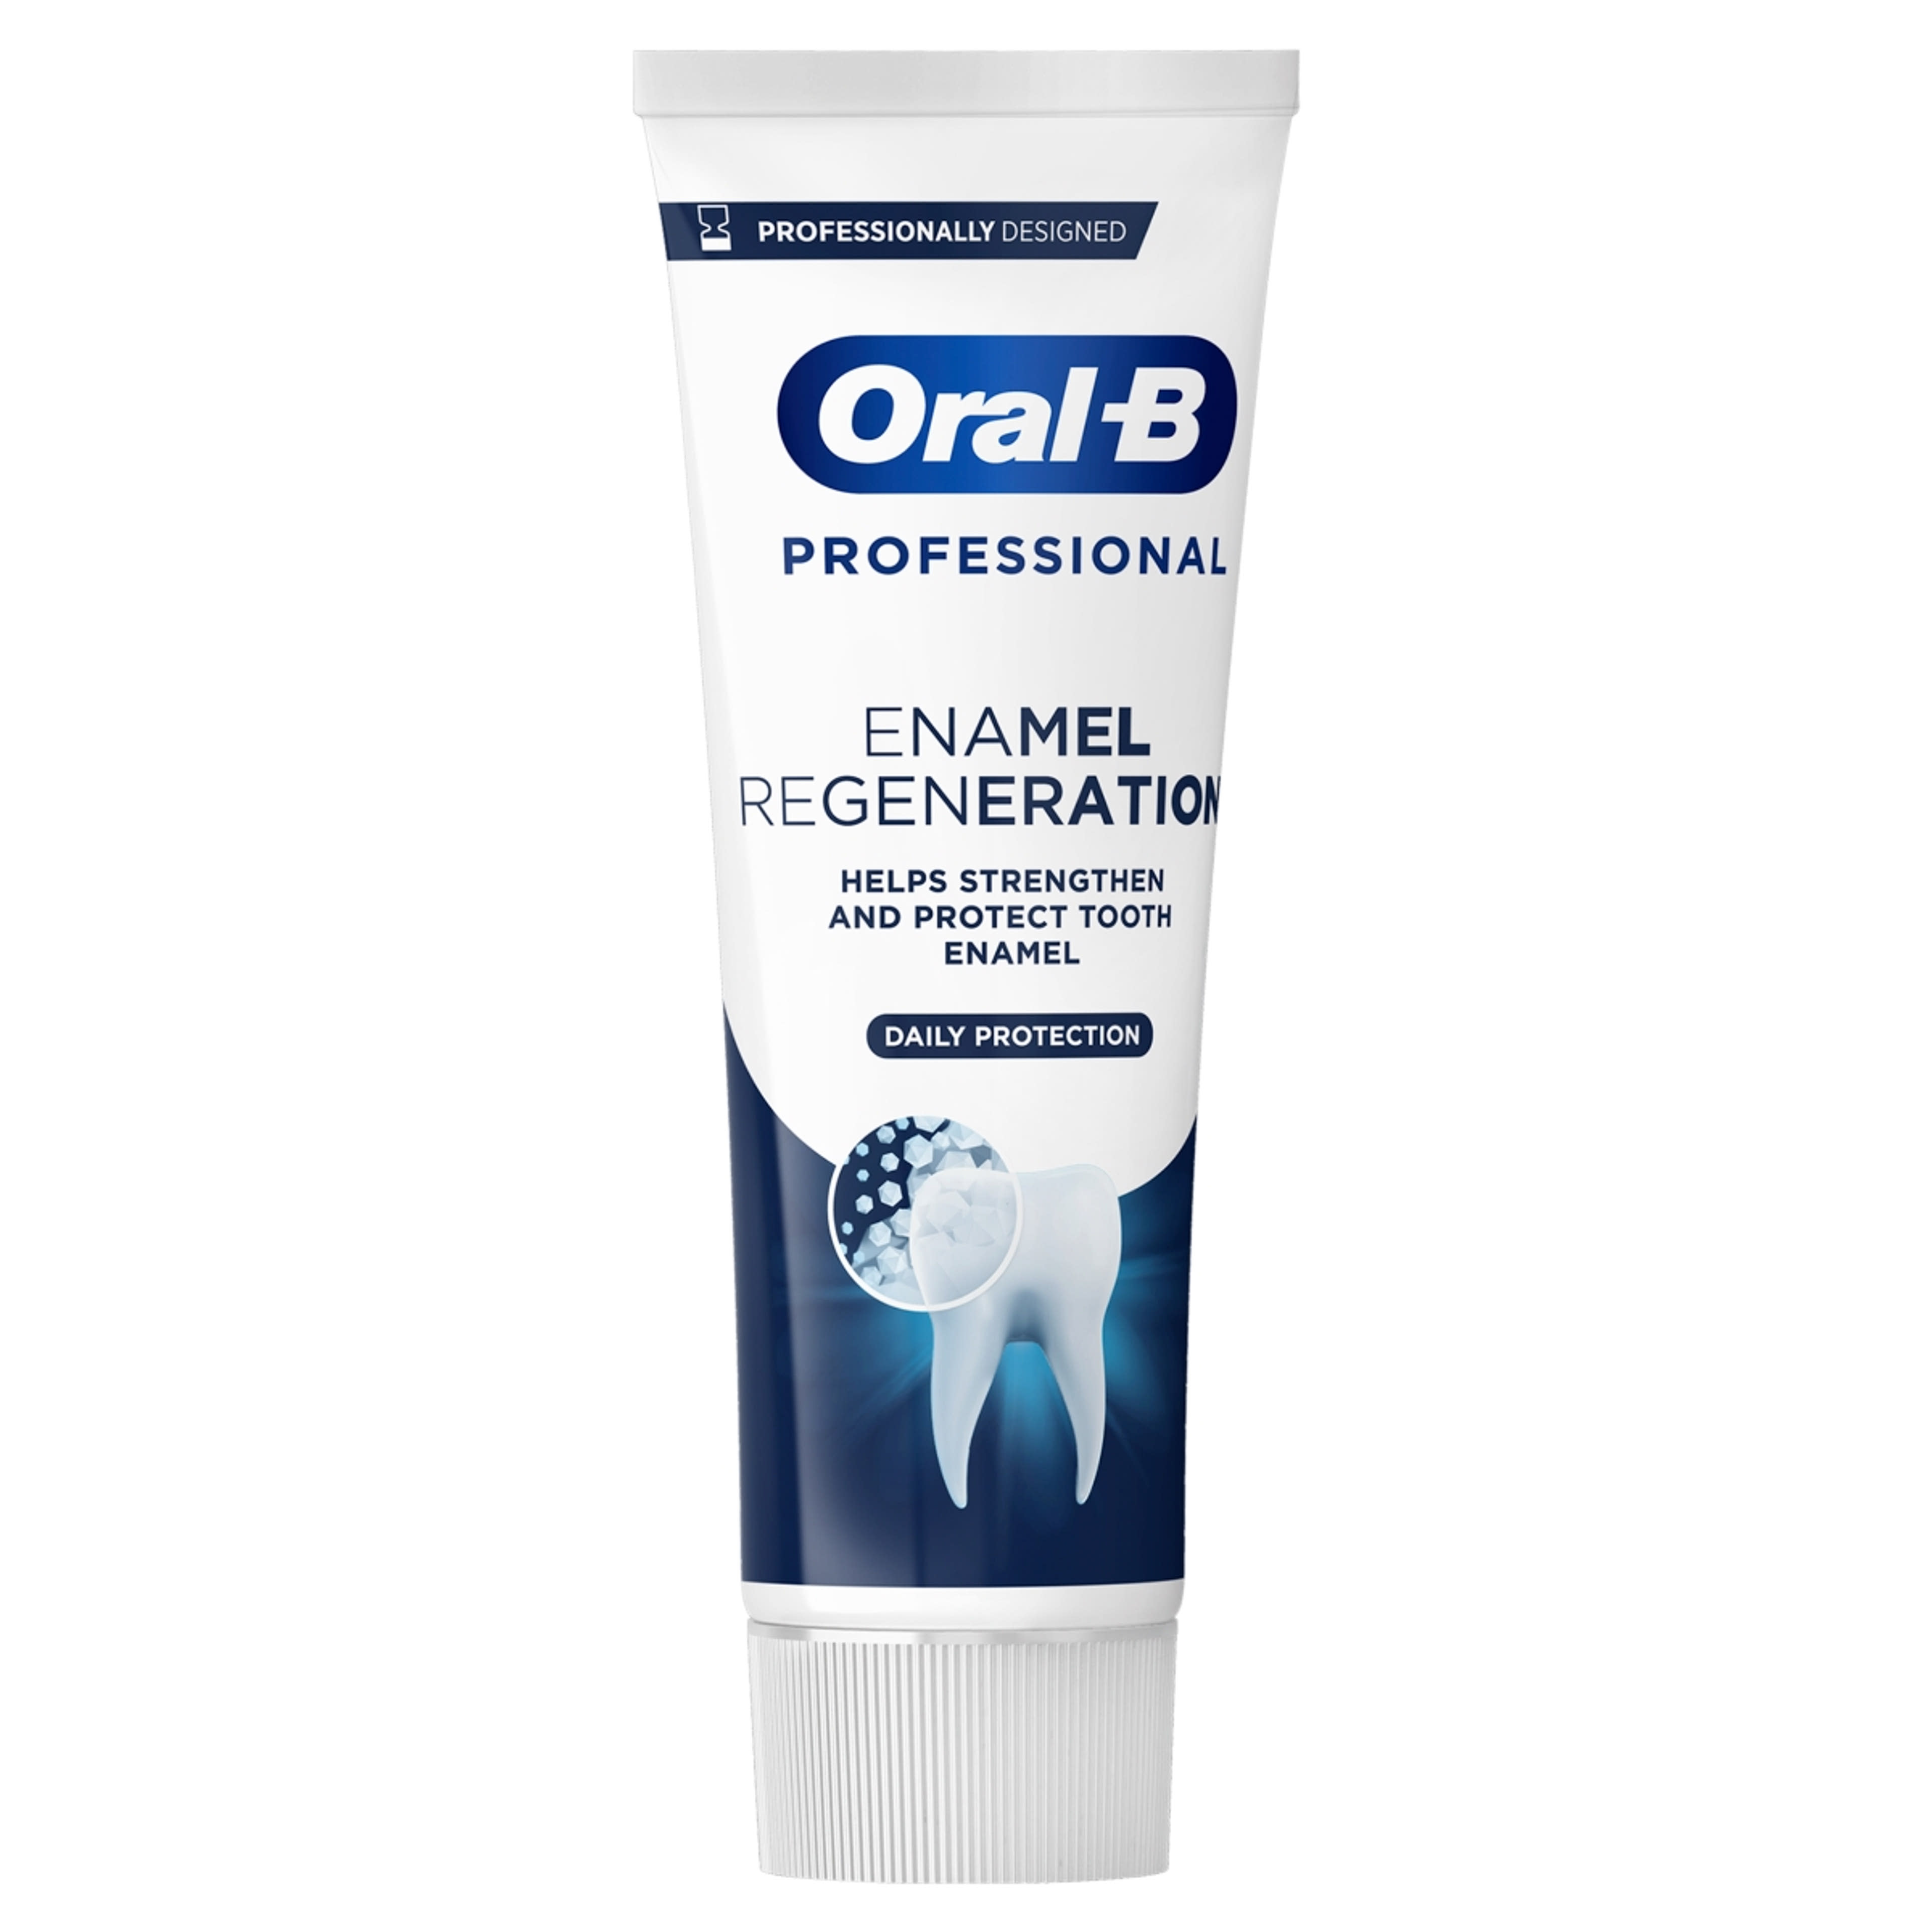 Oral-B Professional Regenerate Enamel Daily Protection fogkrém - 75 ml-8